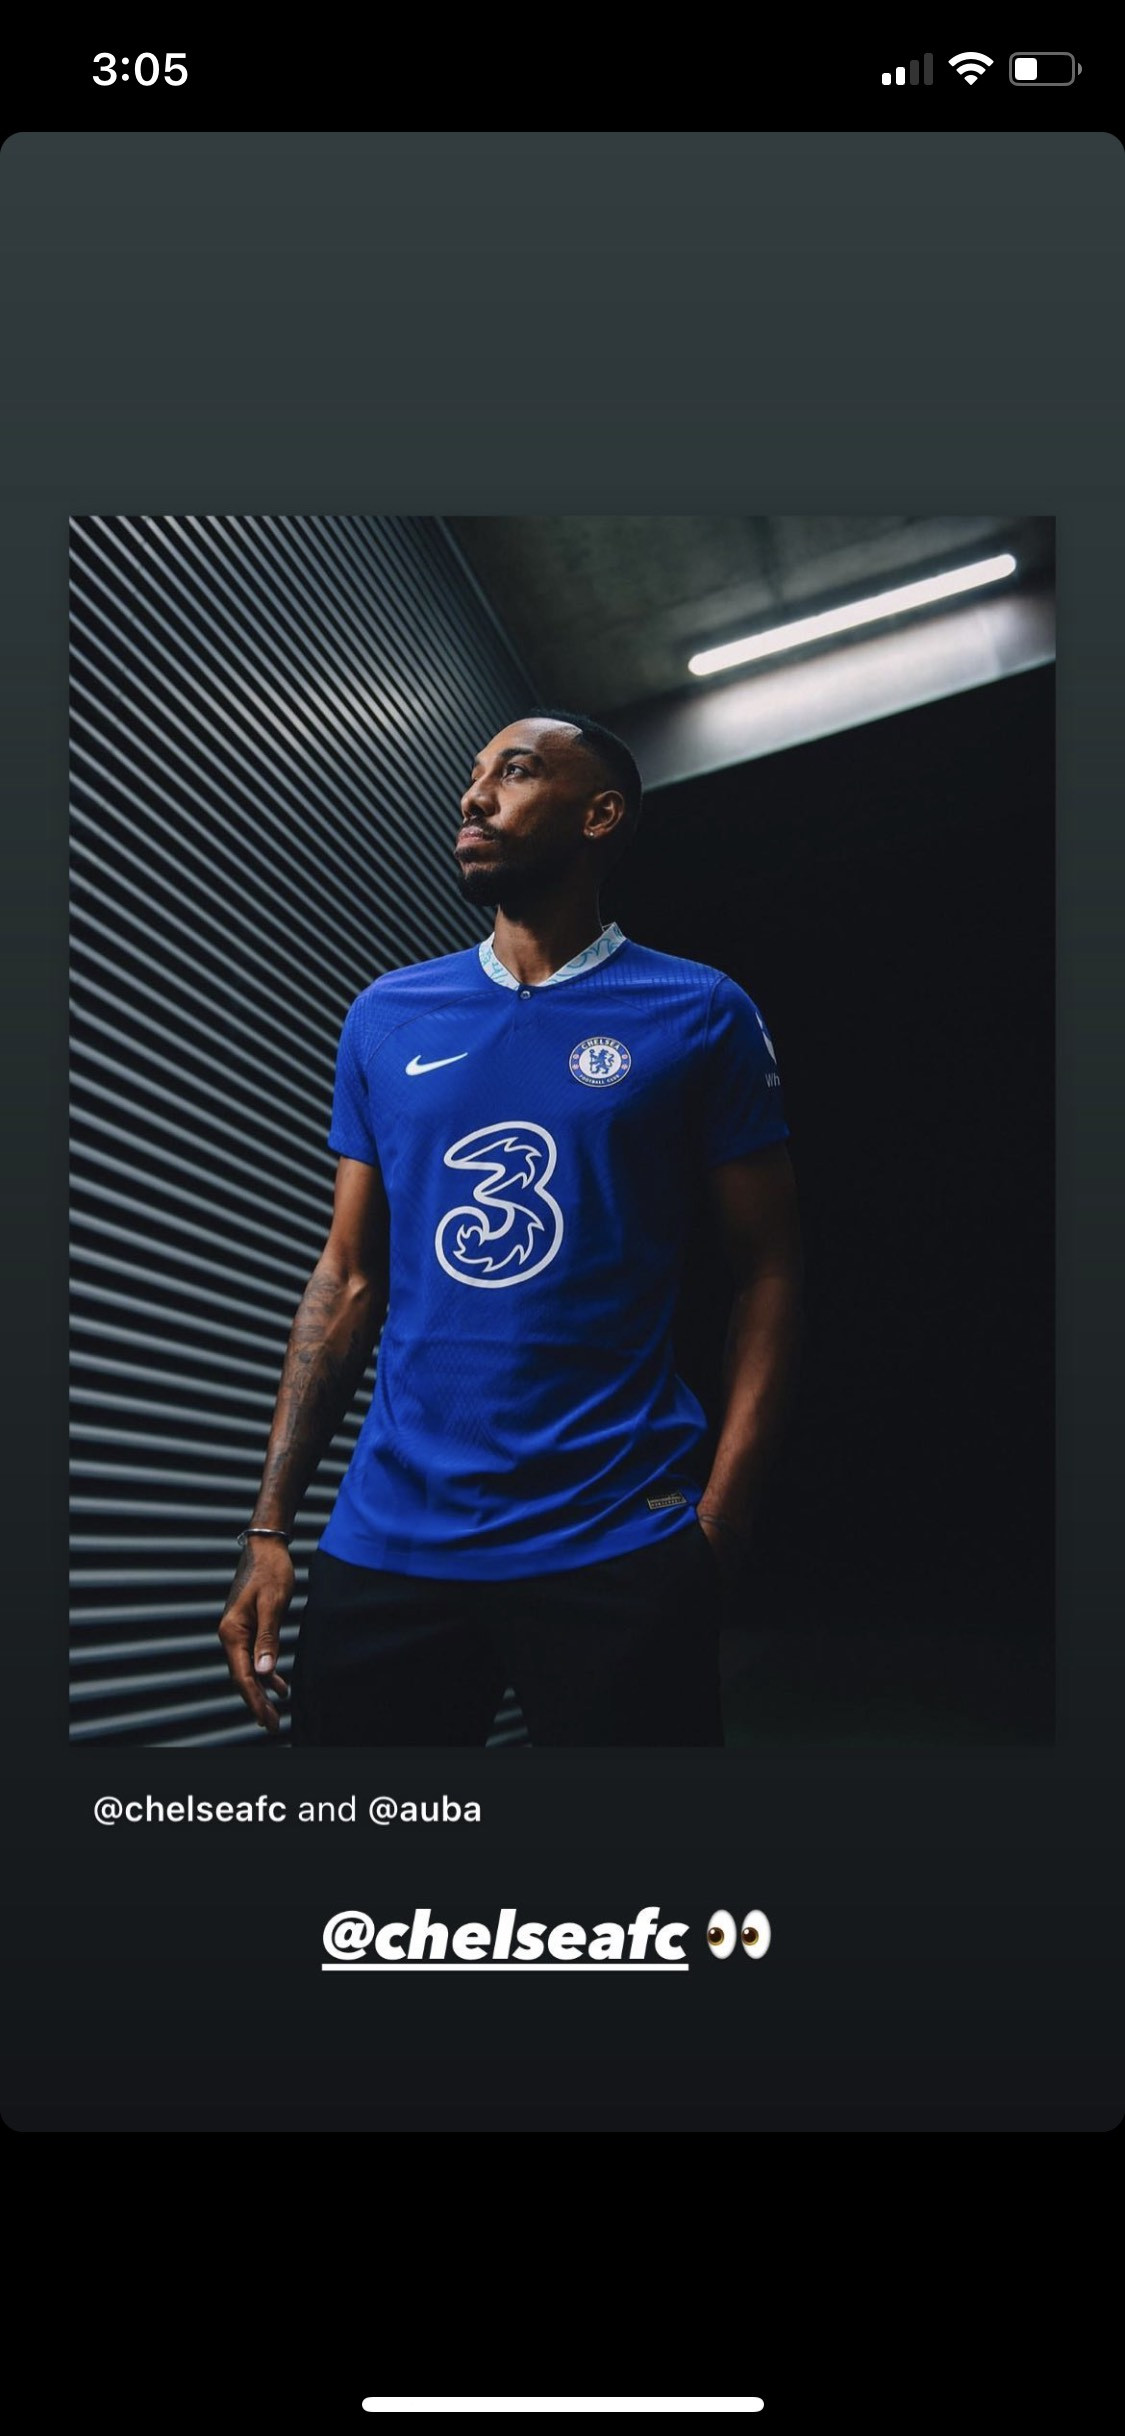 Aubameyang posa con la camiseta del Chelsea